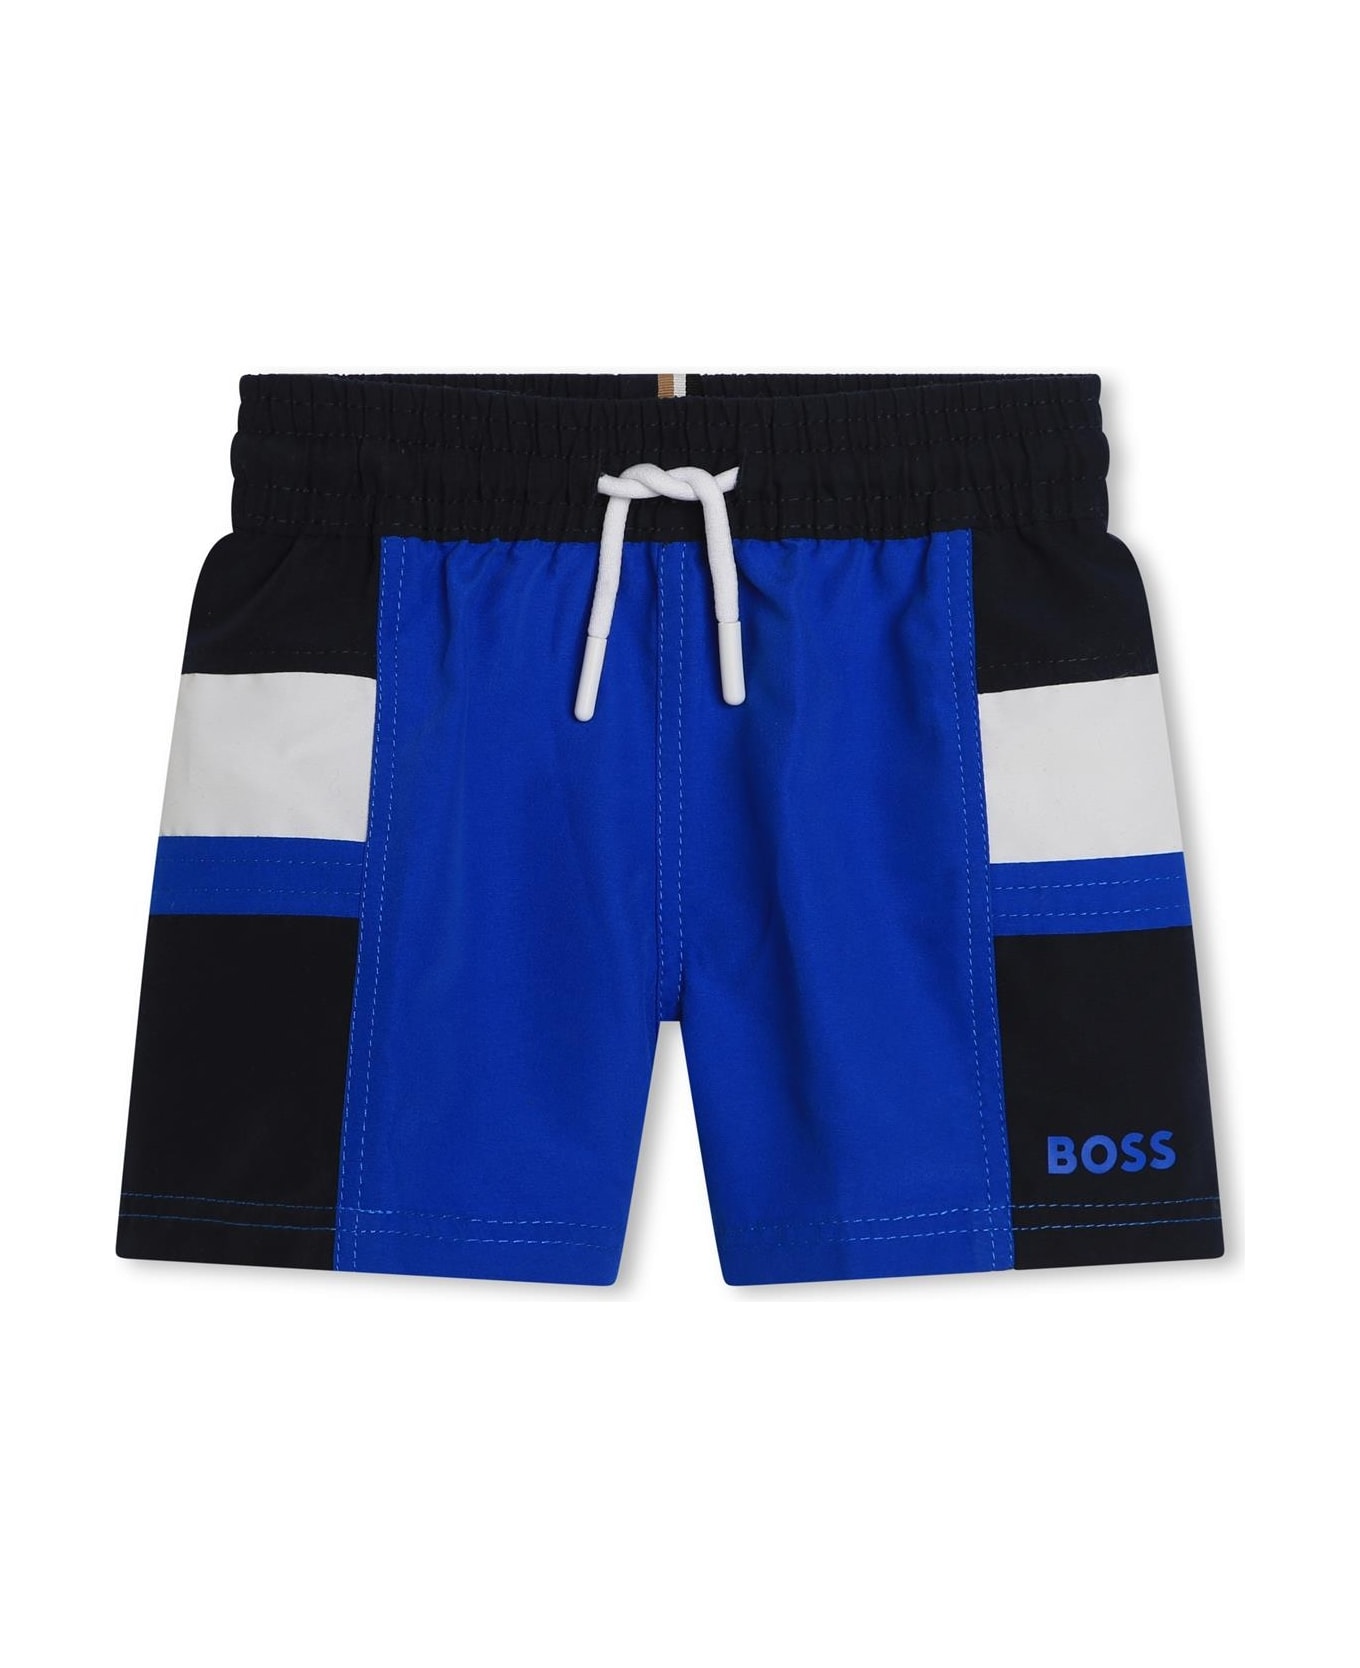 Hugo Boss Swimsuit With Color-block Design - Blue 水着